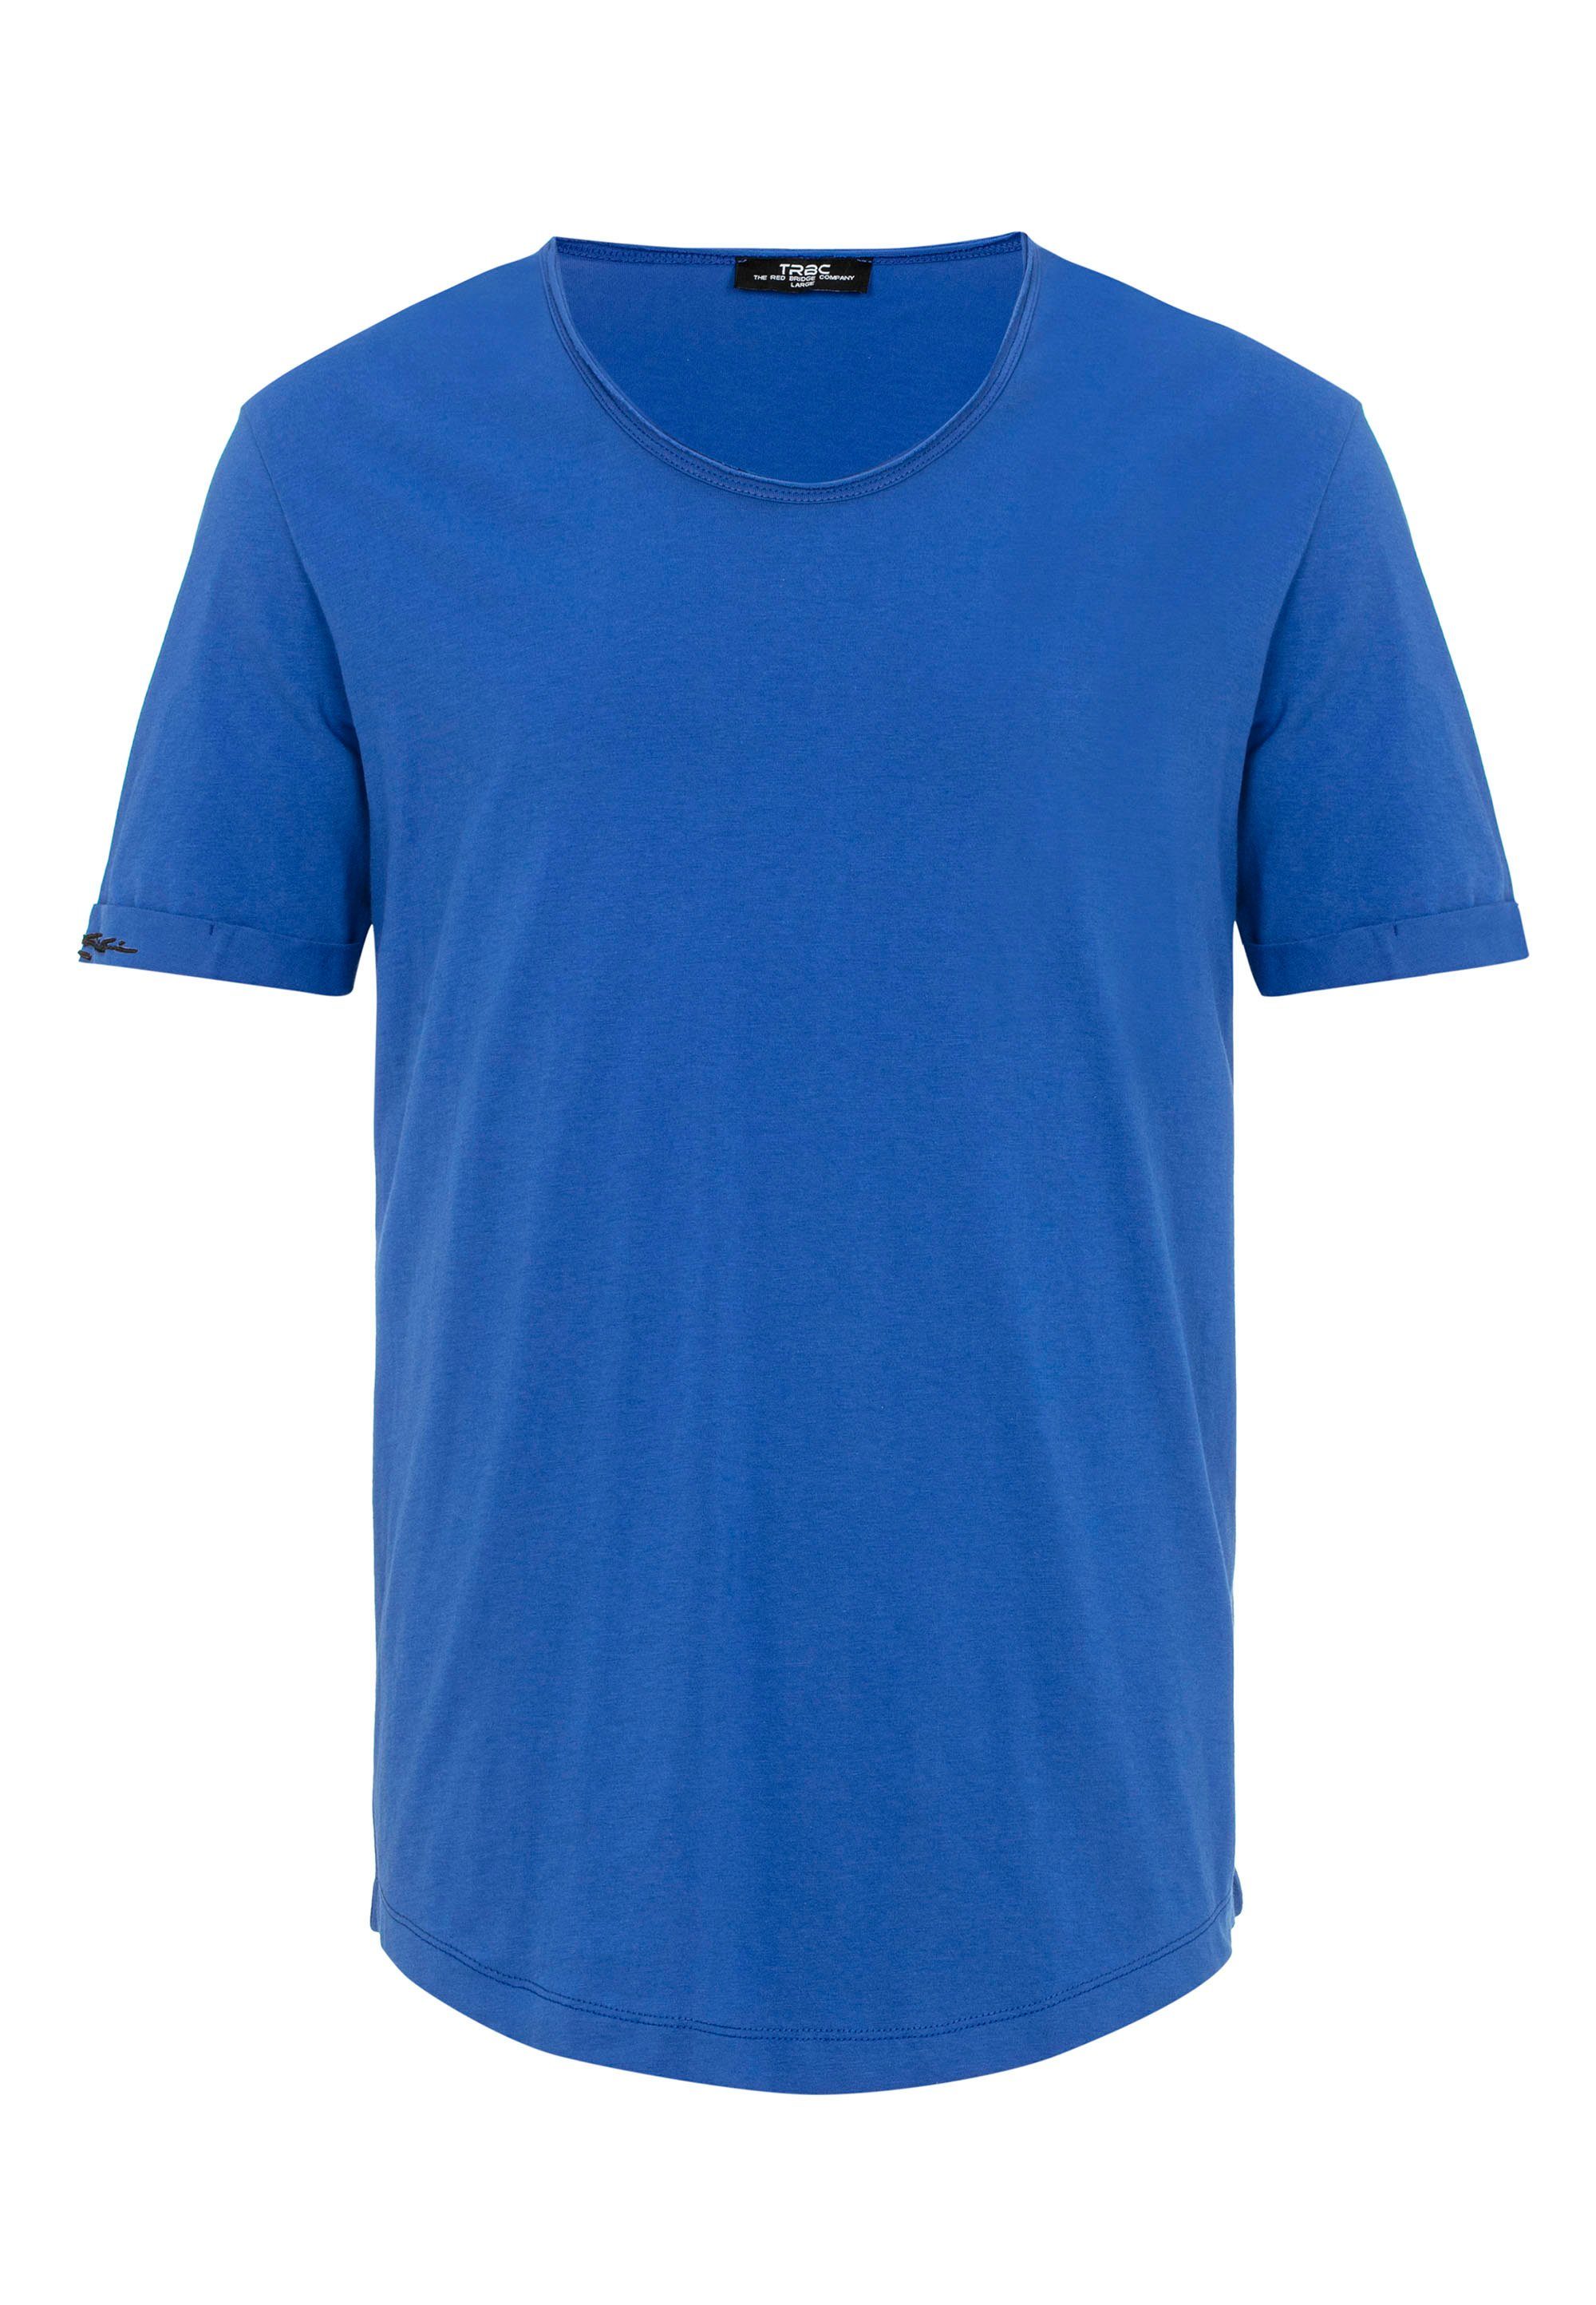 mit Cruces T-Shirt tollem Tragekomfort RedBridge blau Las